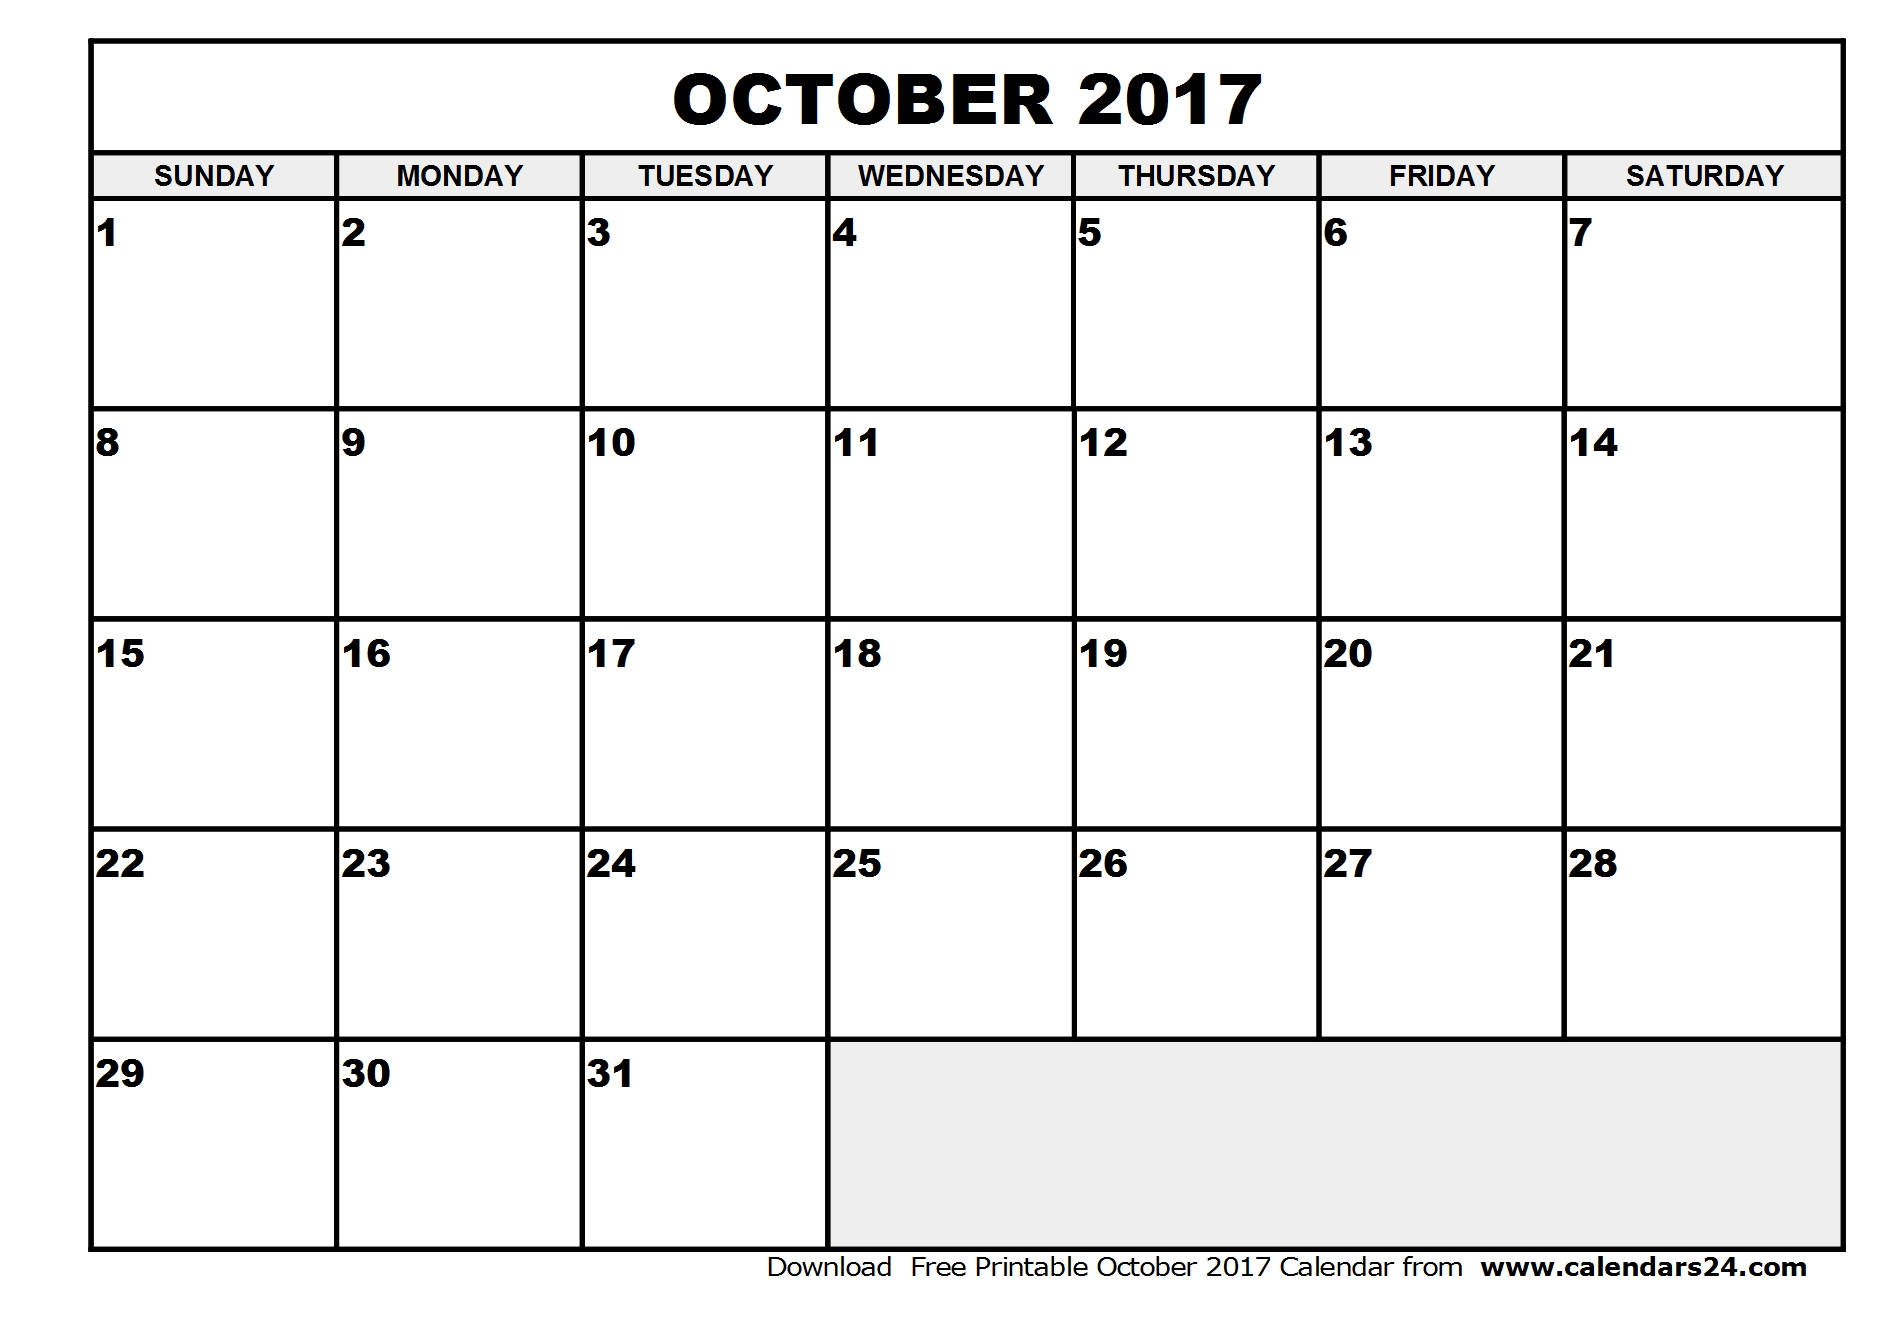 October 2017 Calendar & November 2017 Calendar